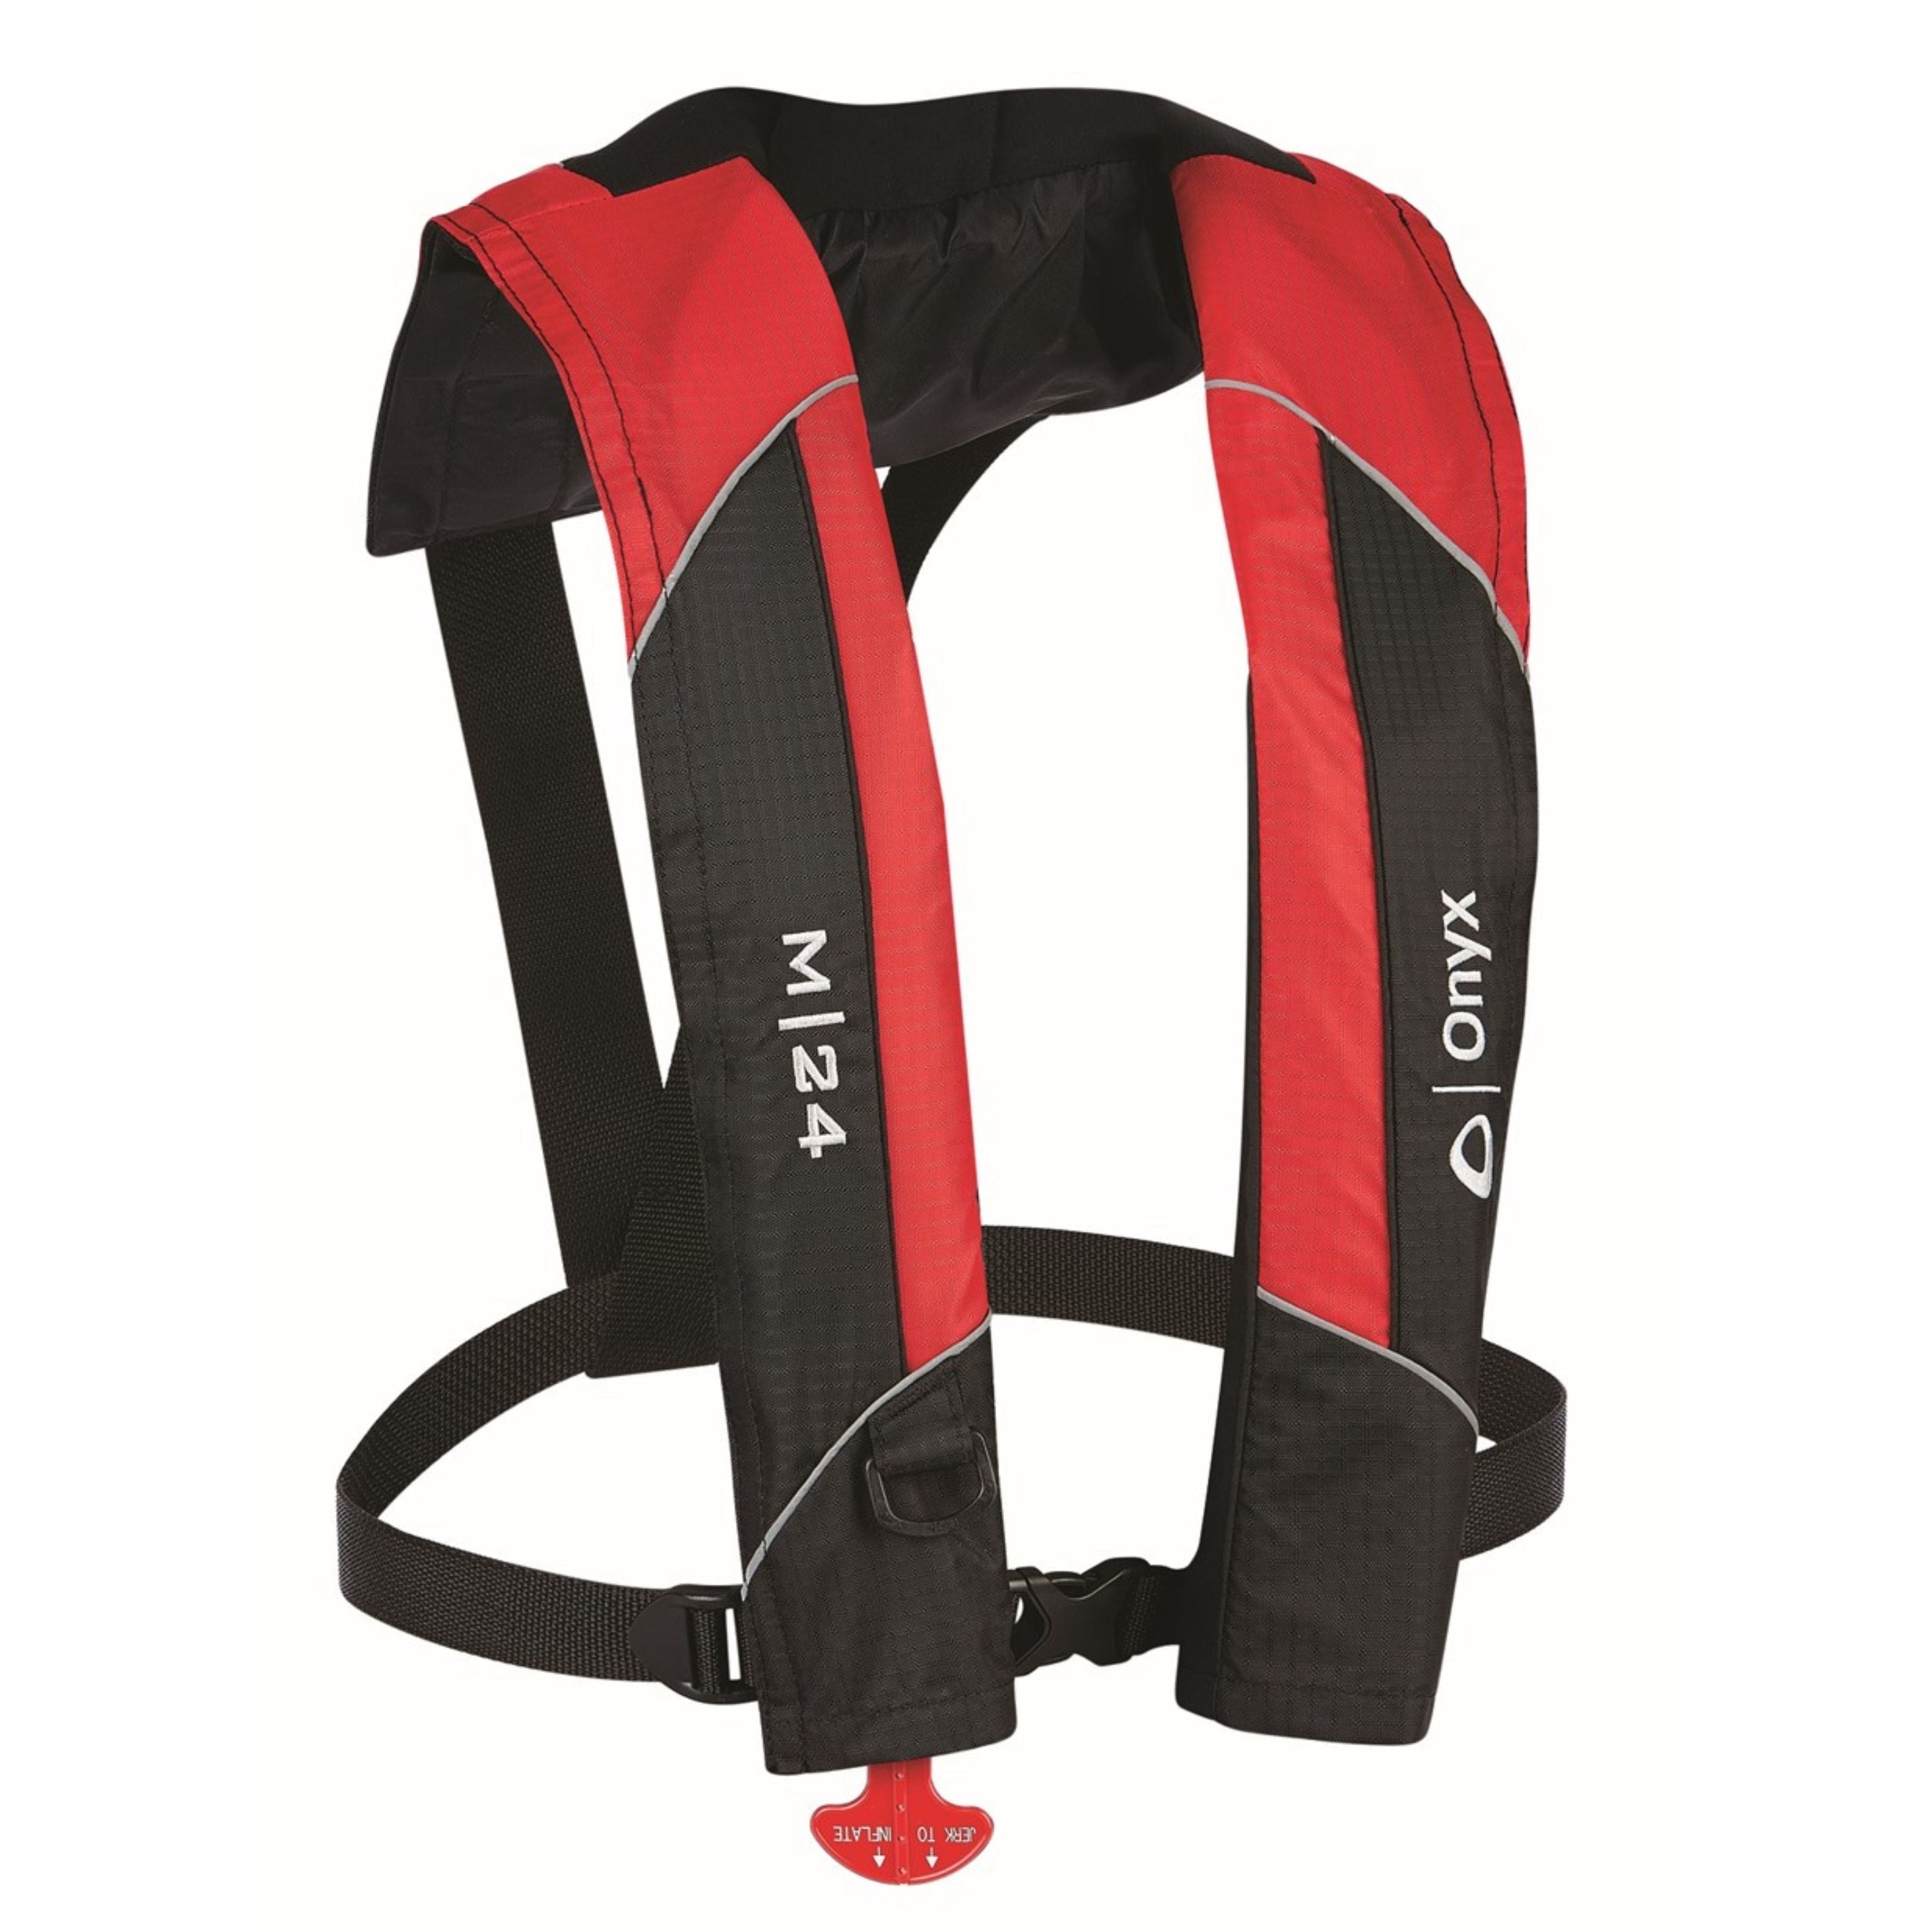 "M-24" Manual inflatable life jacket